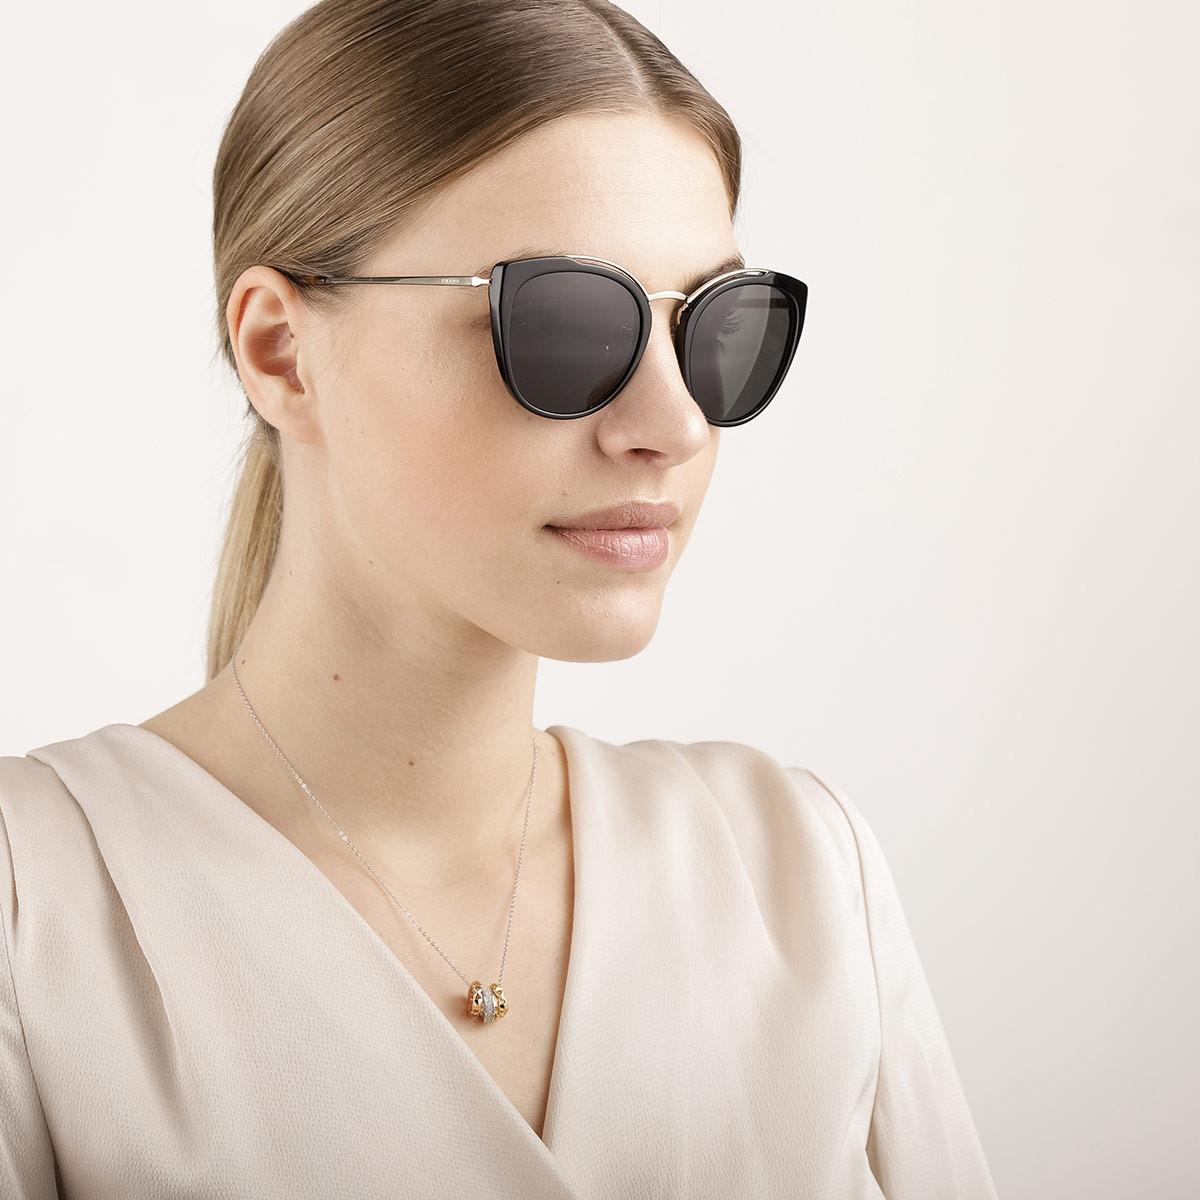 prada sunglasses pr 20us 54, OFF 78%,Buy!